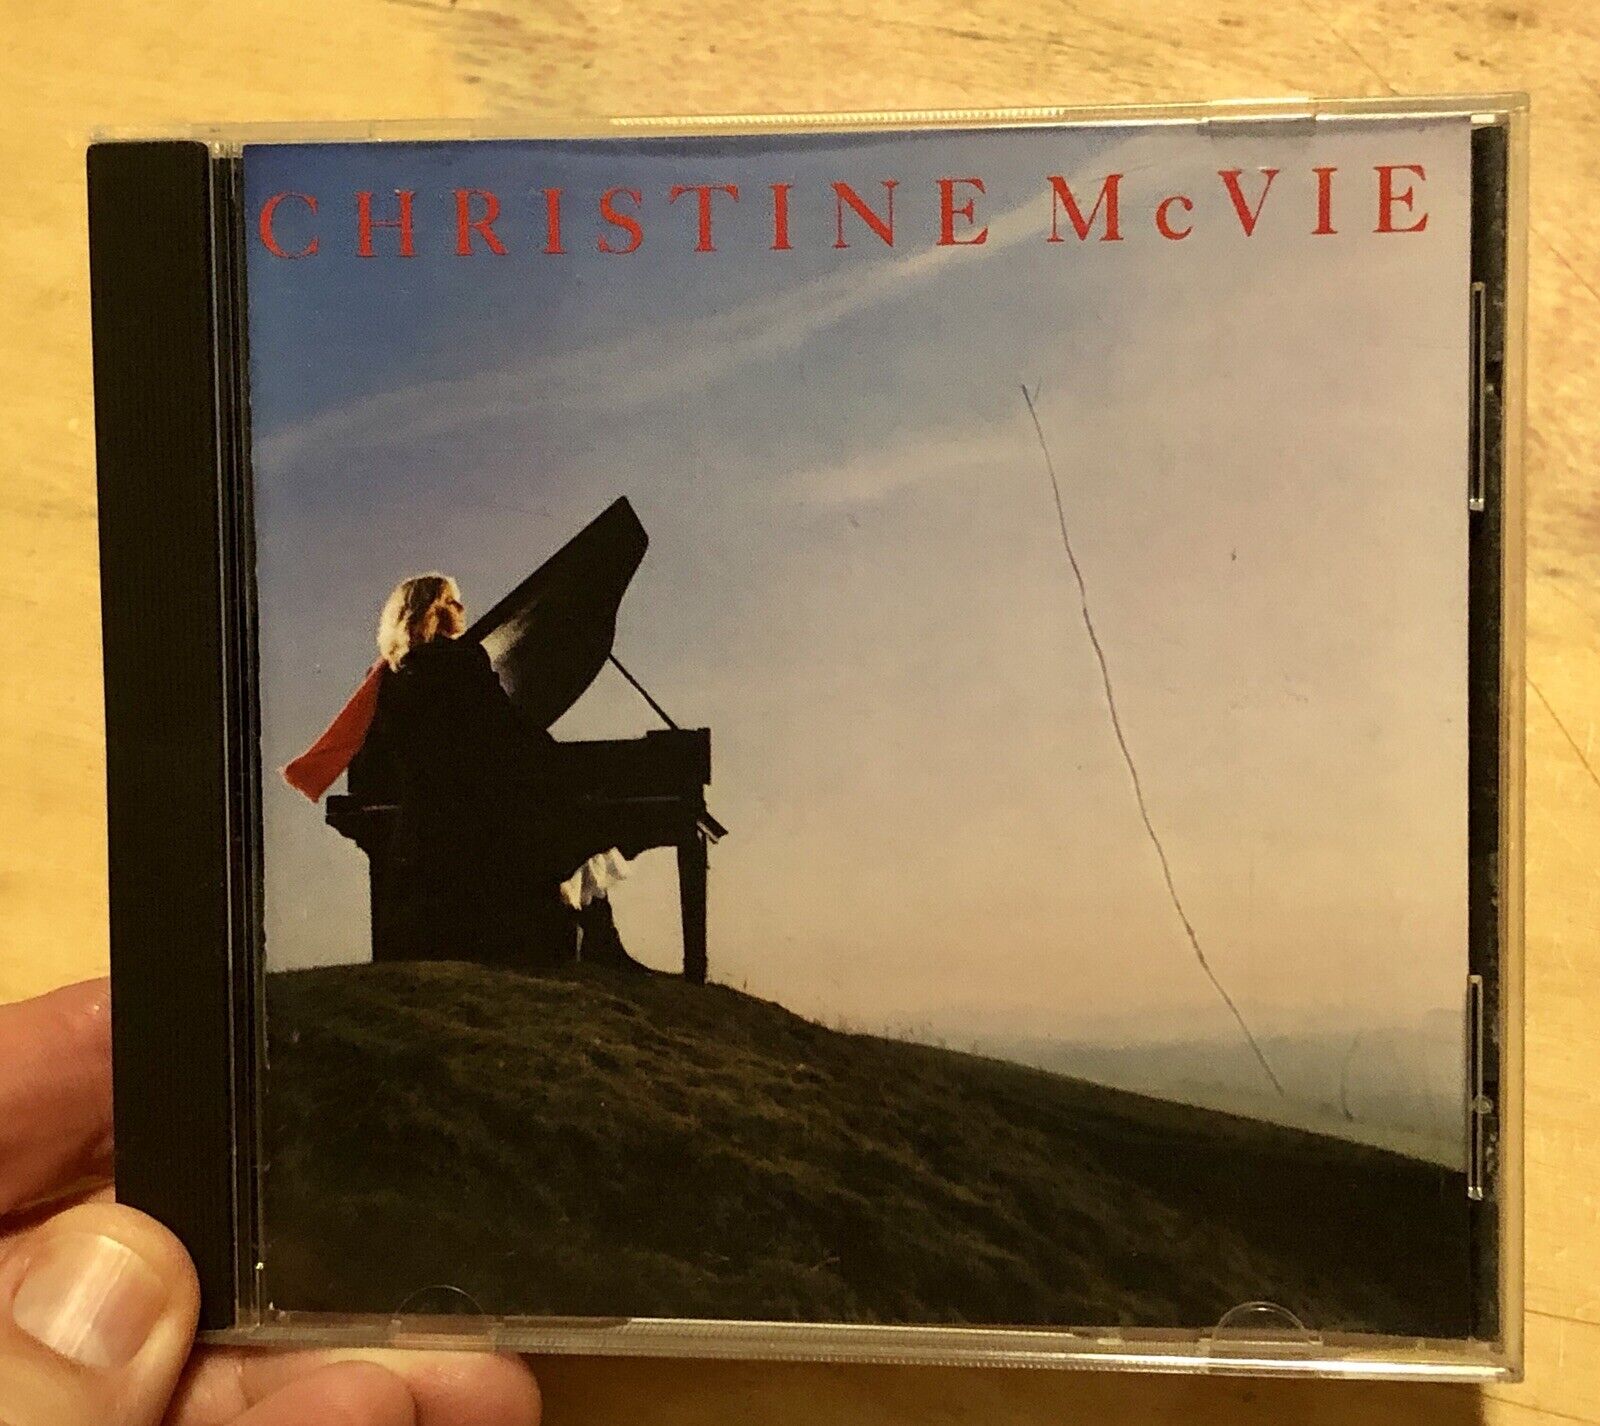 Christine McVie - Christine McVie (Self Titled), CD (Warner Bros. 9 25059-2)